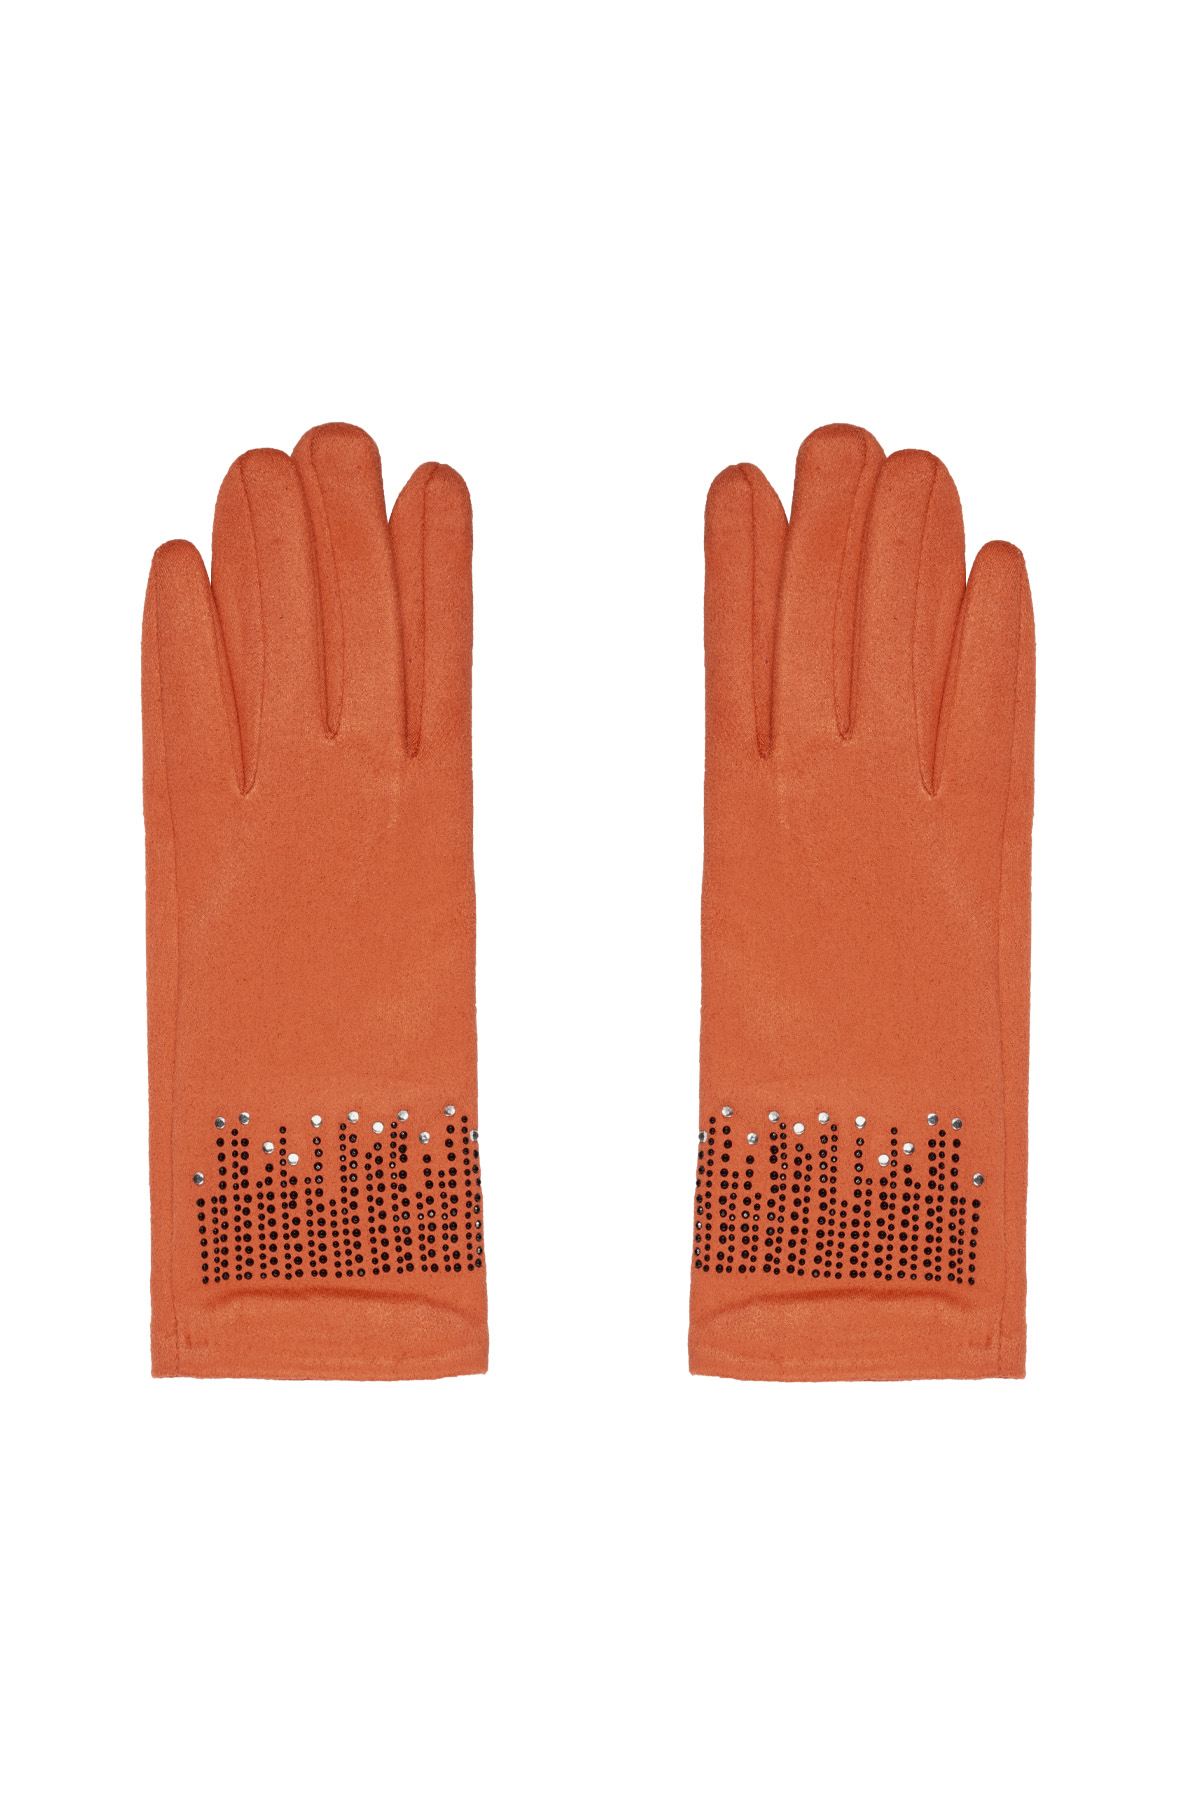 Gloves stones - orange h5 